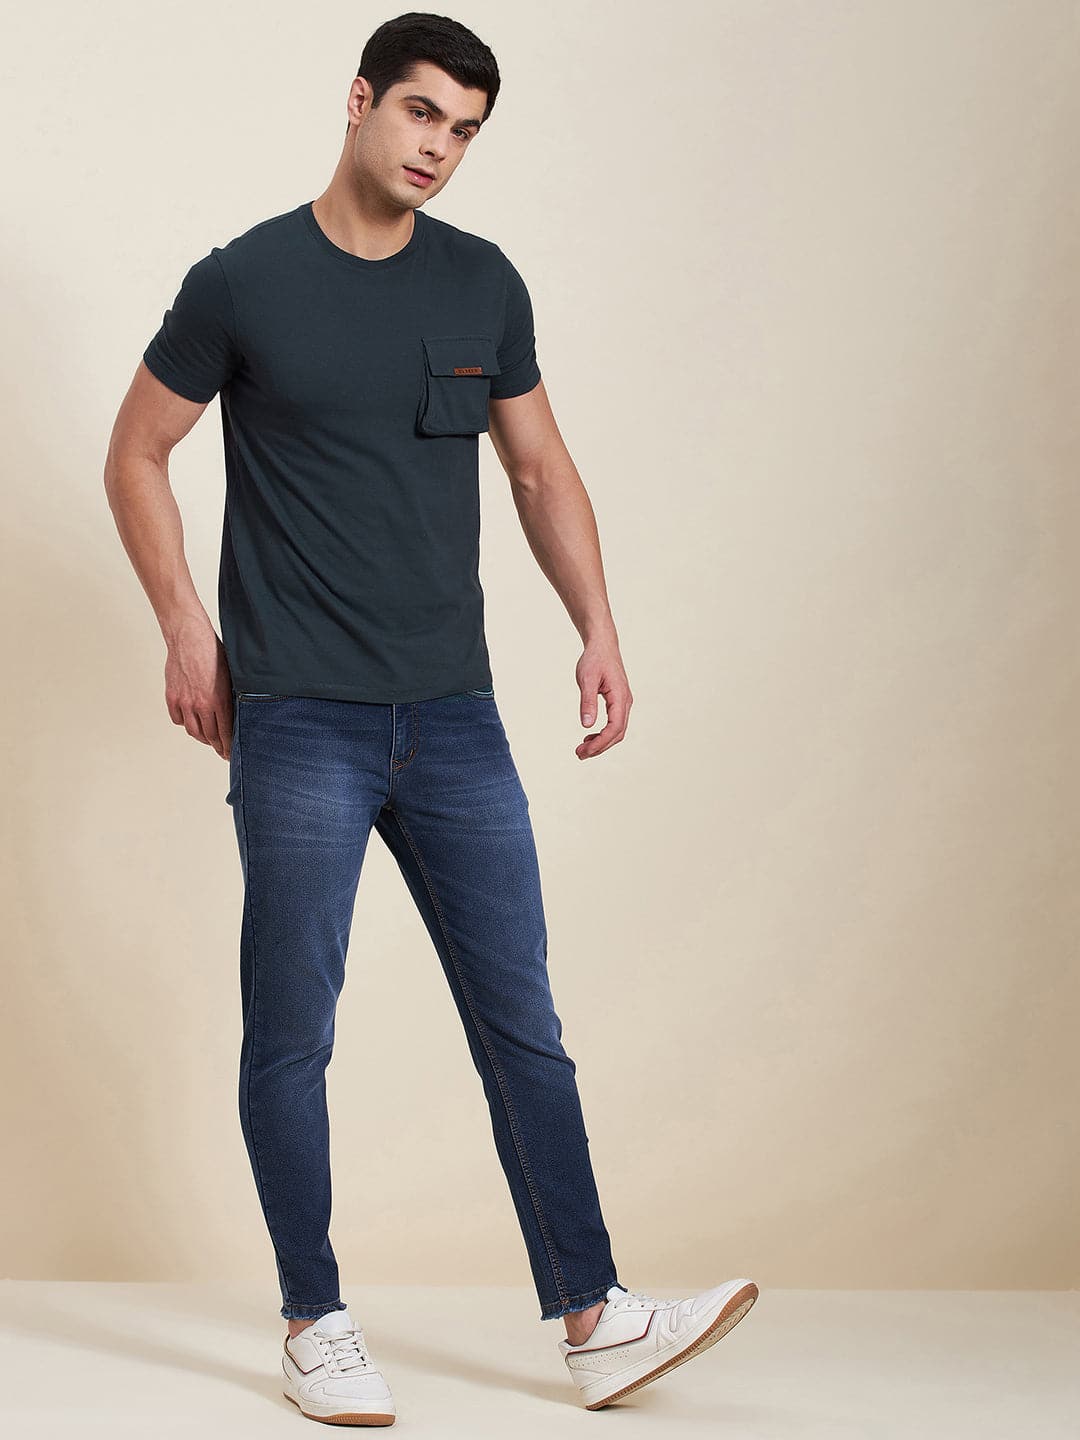 Men's Dark Blue Box Pocket Regular T-Shirt - LYUSH-MASCLN